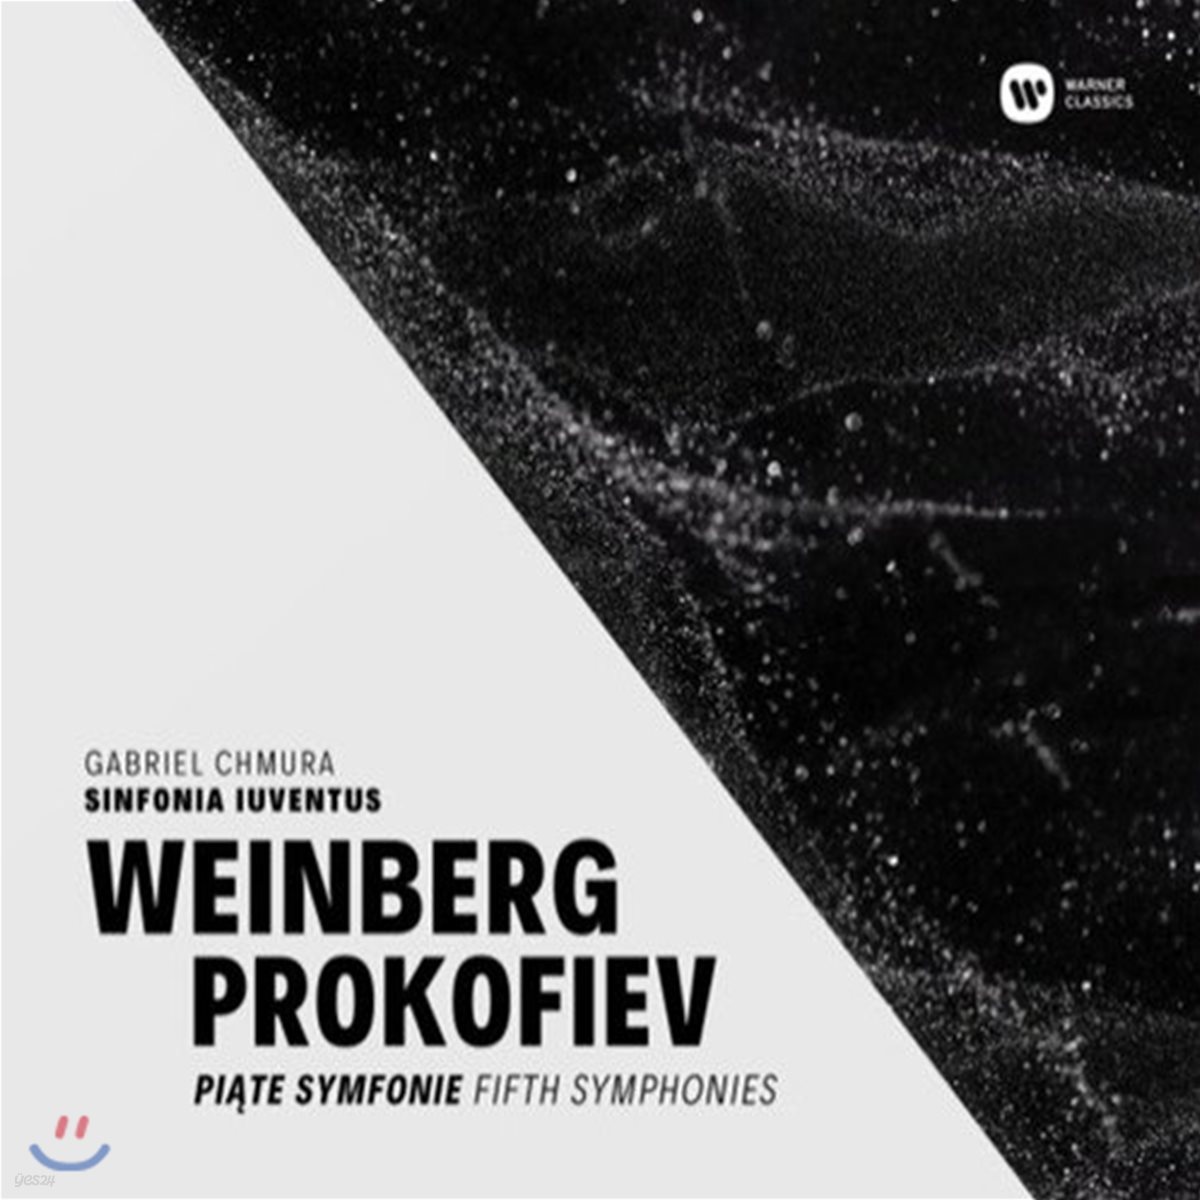 Gabriel Chmura 프로코피에프 / 바인베르크: 교향곡 5번 - 신포니아 유벤투스, 가브리엘 슈무라 (Weinberg / Prokofiev: Fifth Symphonies [Piate Symfonie])